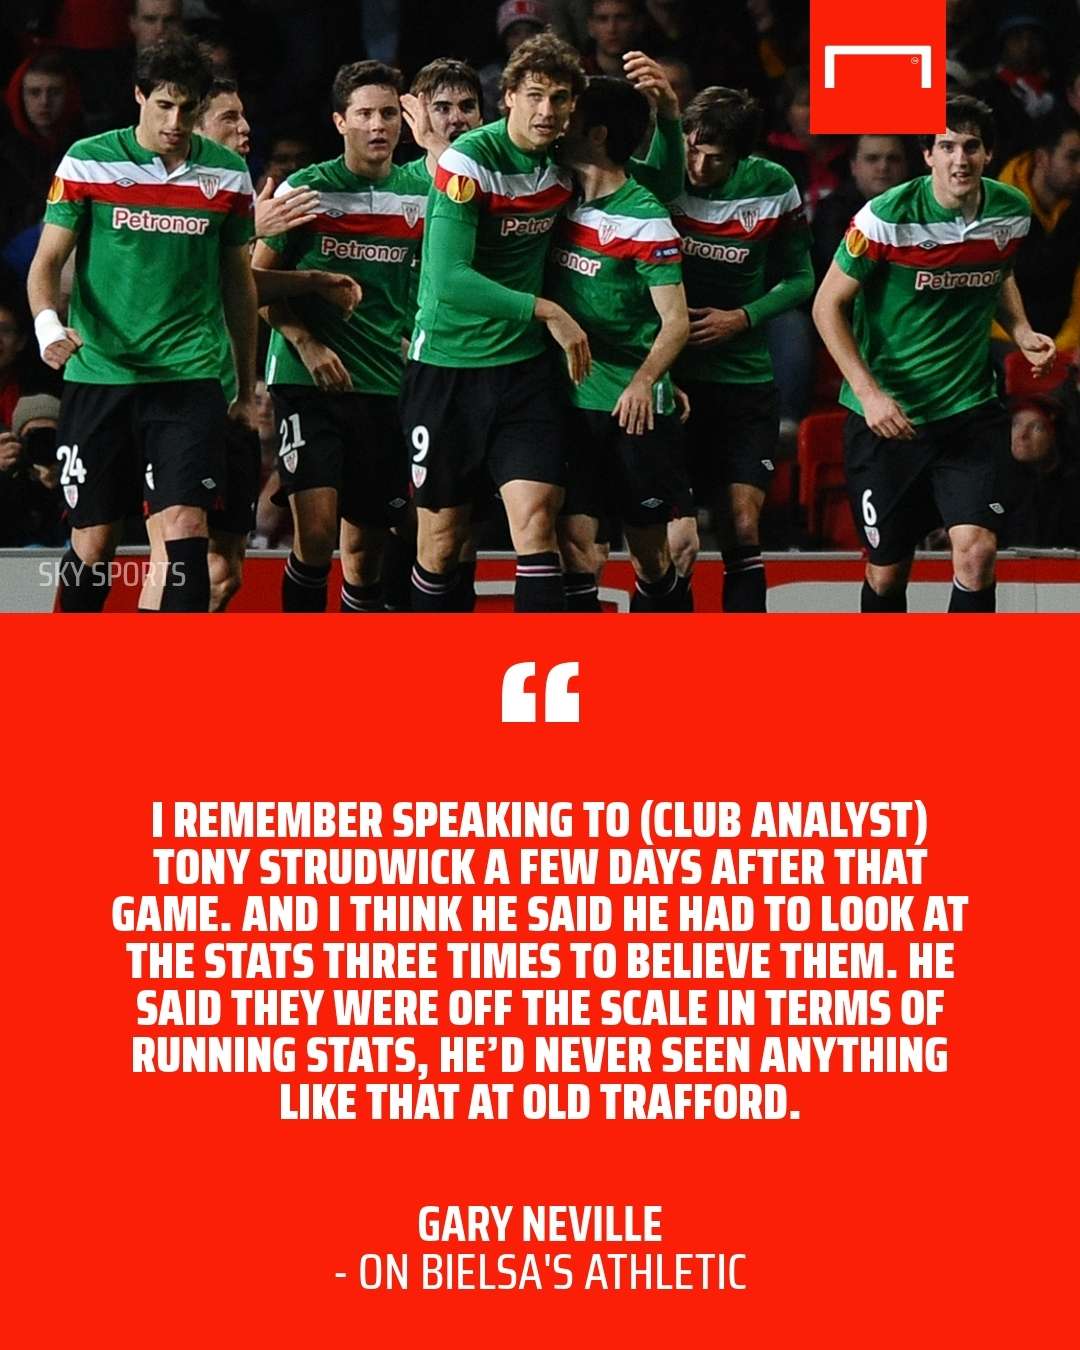 Athletic Club Neville quote GFX